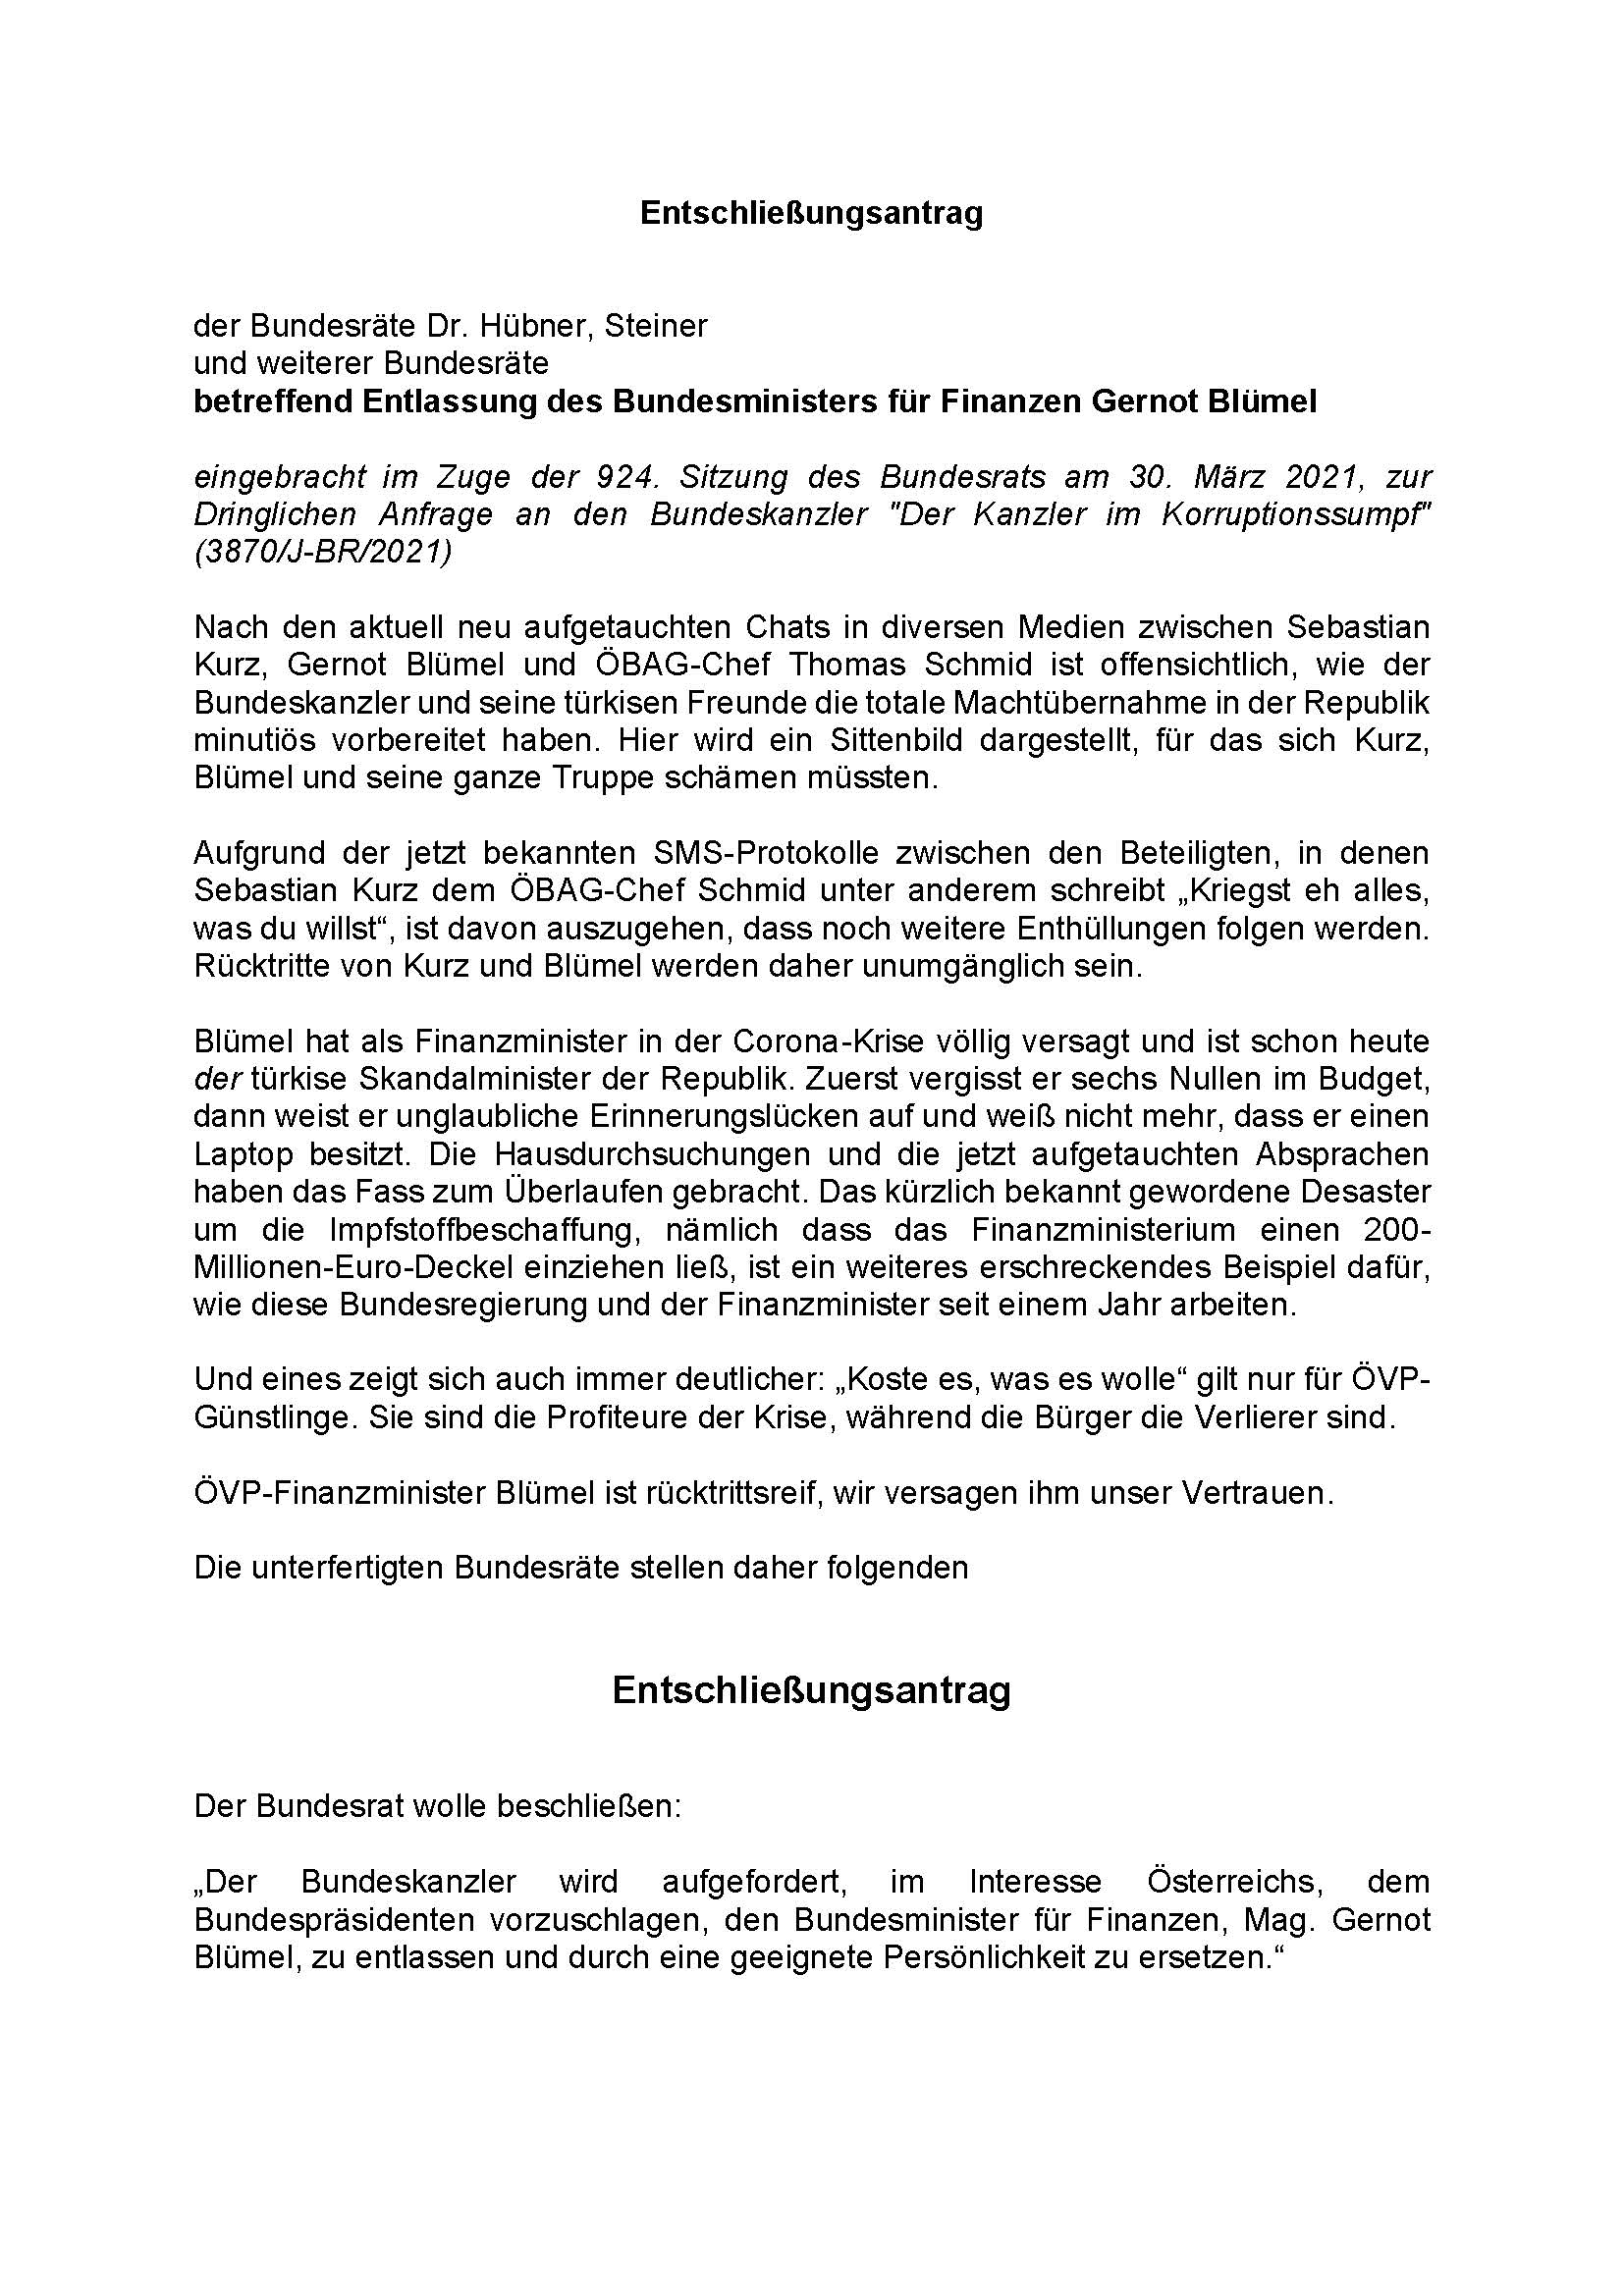 Bundesrat - Entschließungsantrag Johannes Hübner - Misstrauensantrag Finanzminister Blümel